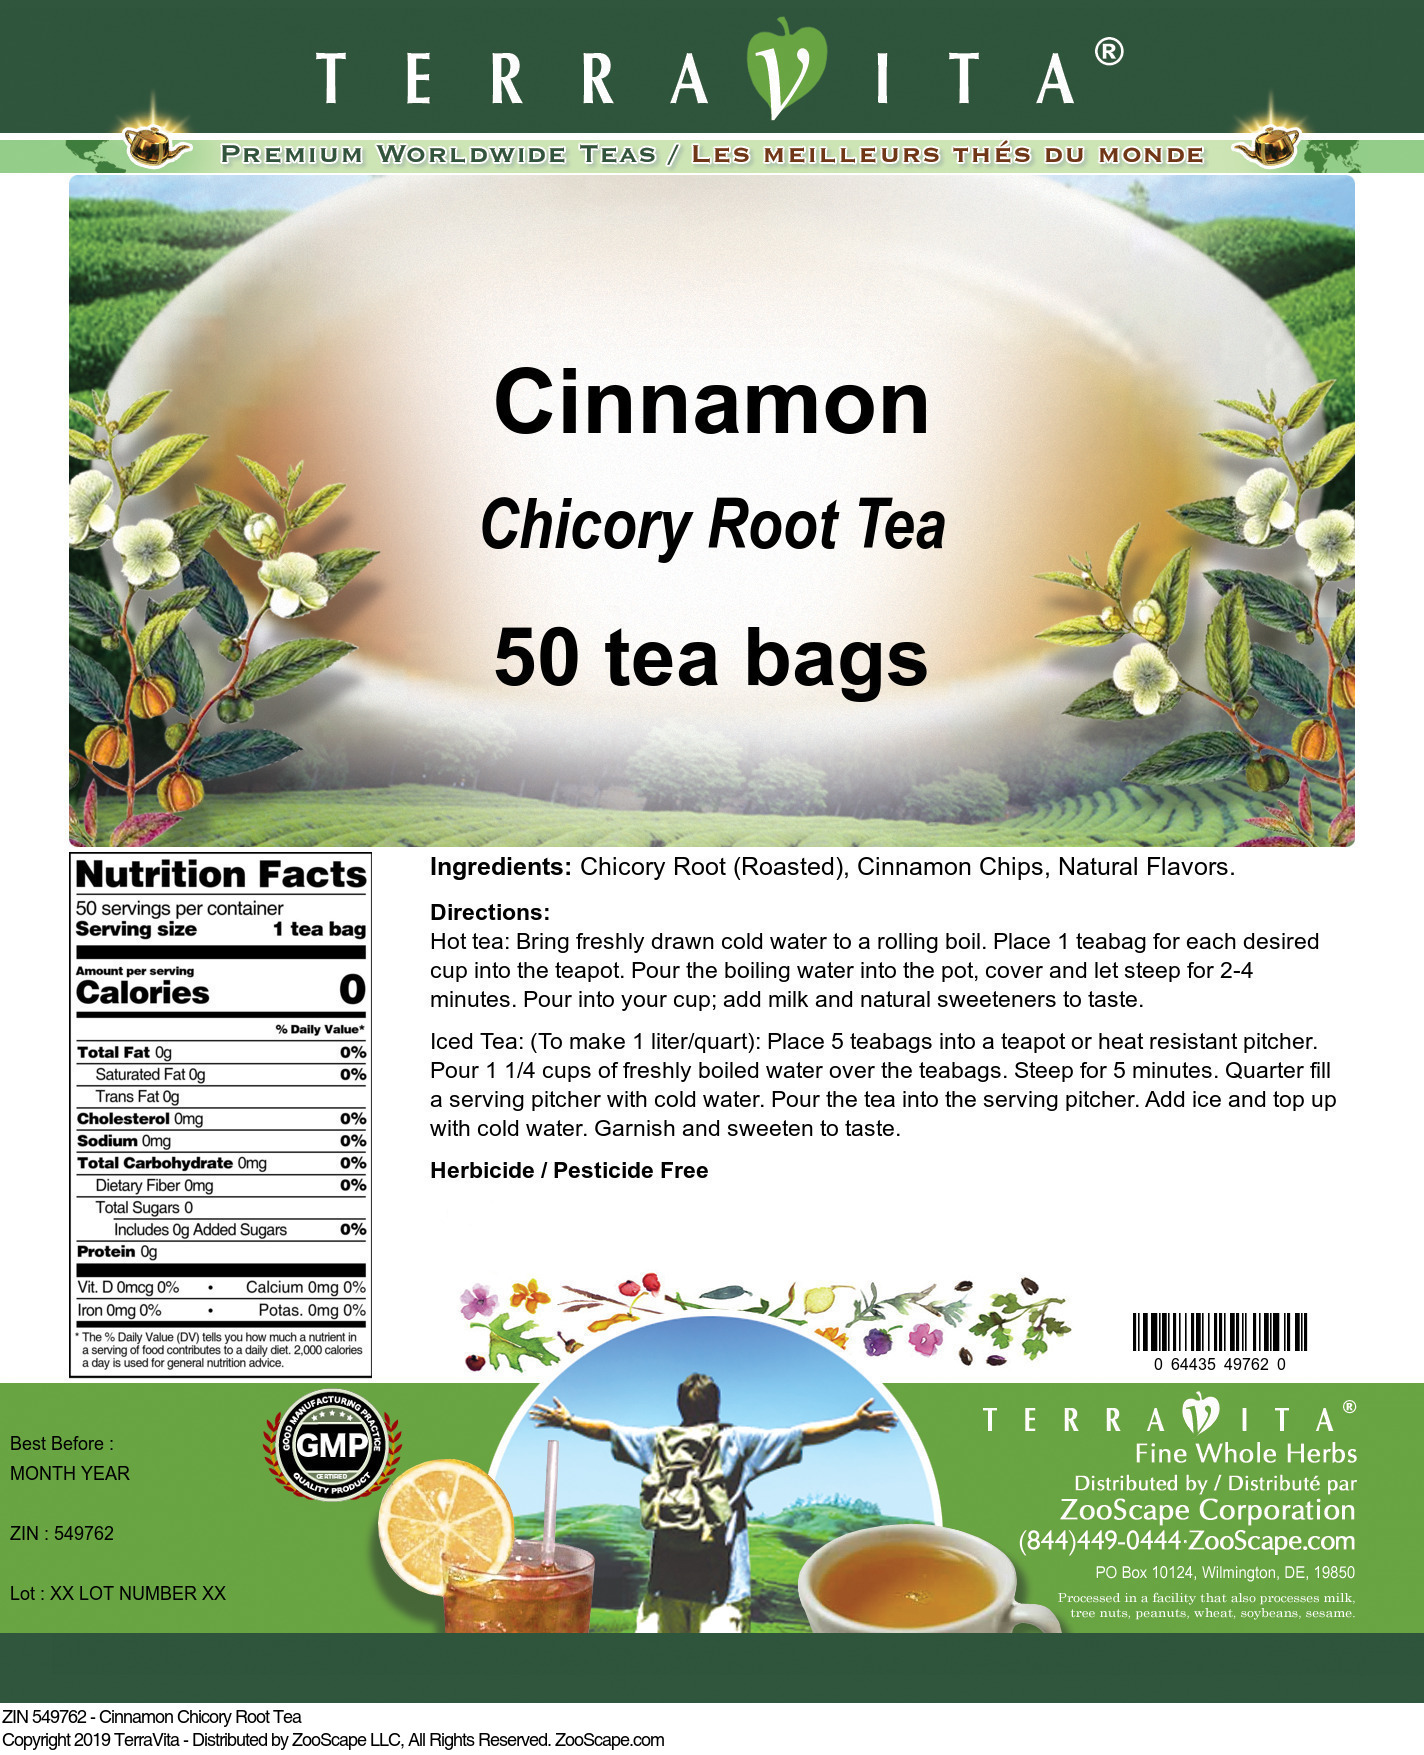 Cinnamon Chicory Root Tea - Label